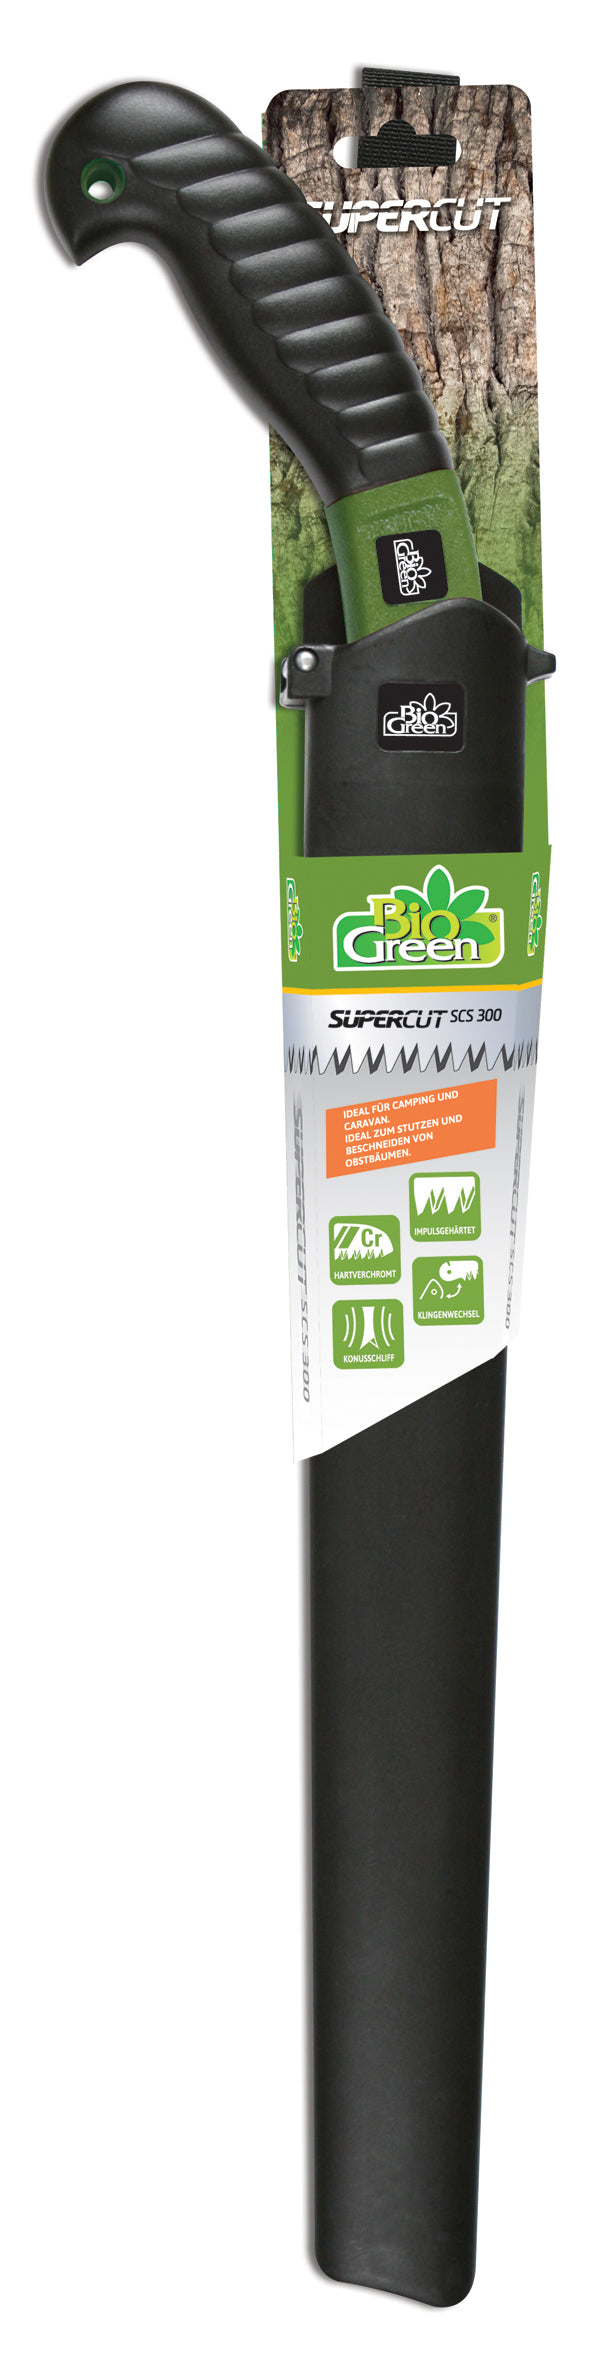 Bio Green Gartensäge Supercut mit 300 mm Schnittlänge in Verpackung